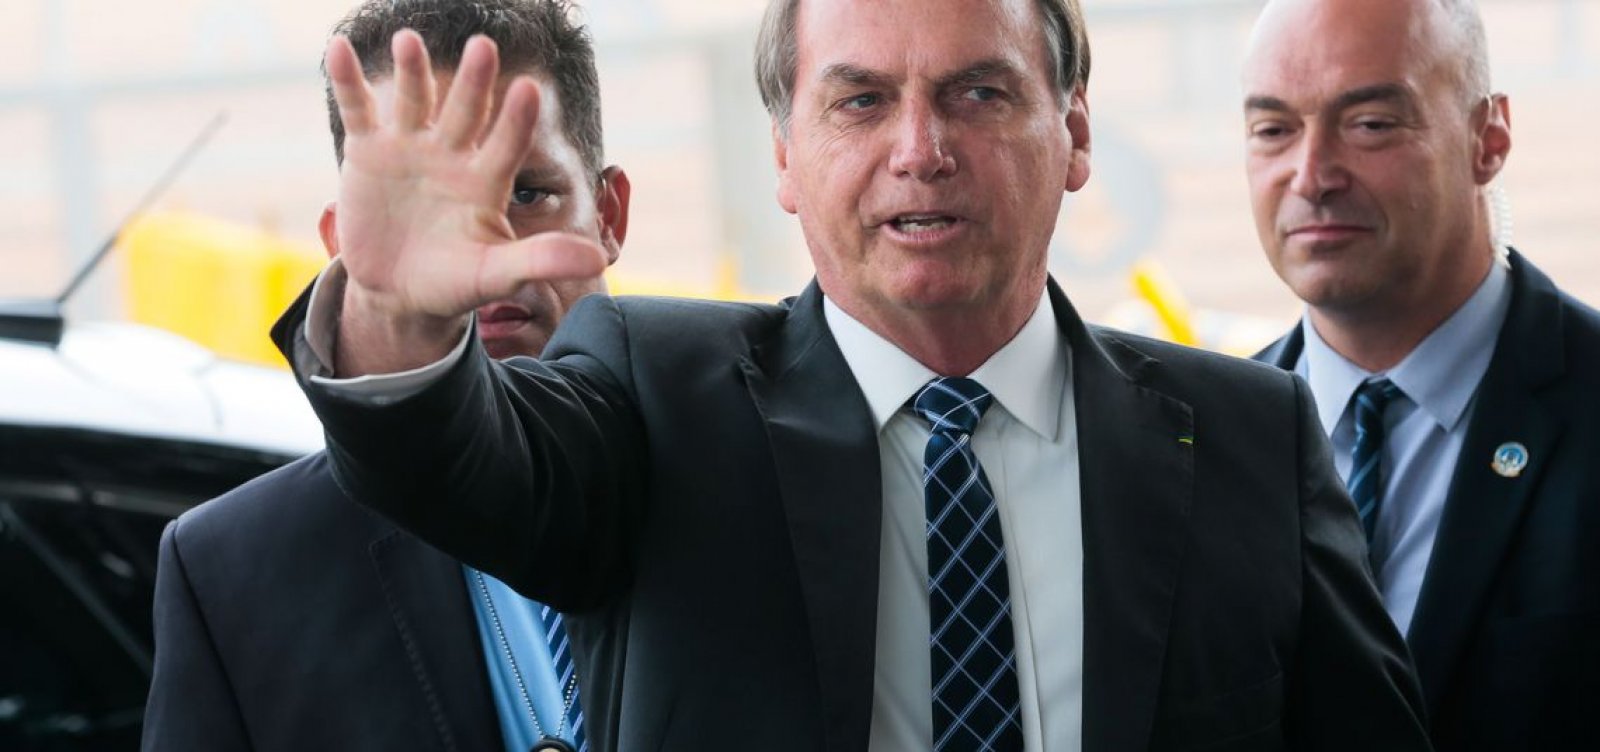 'Esquerda diz que tudo é golpe', reclama Bolsonaro